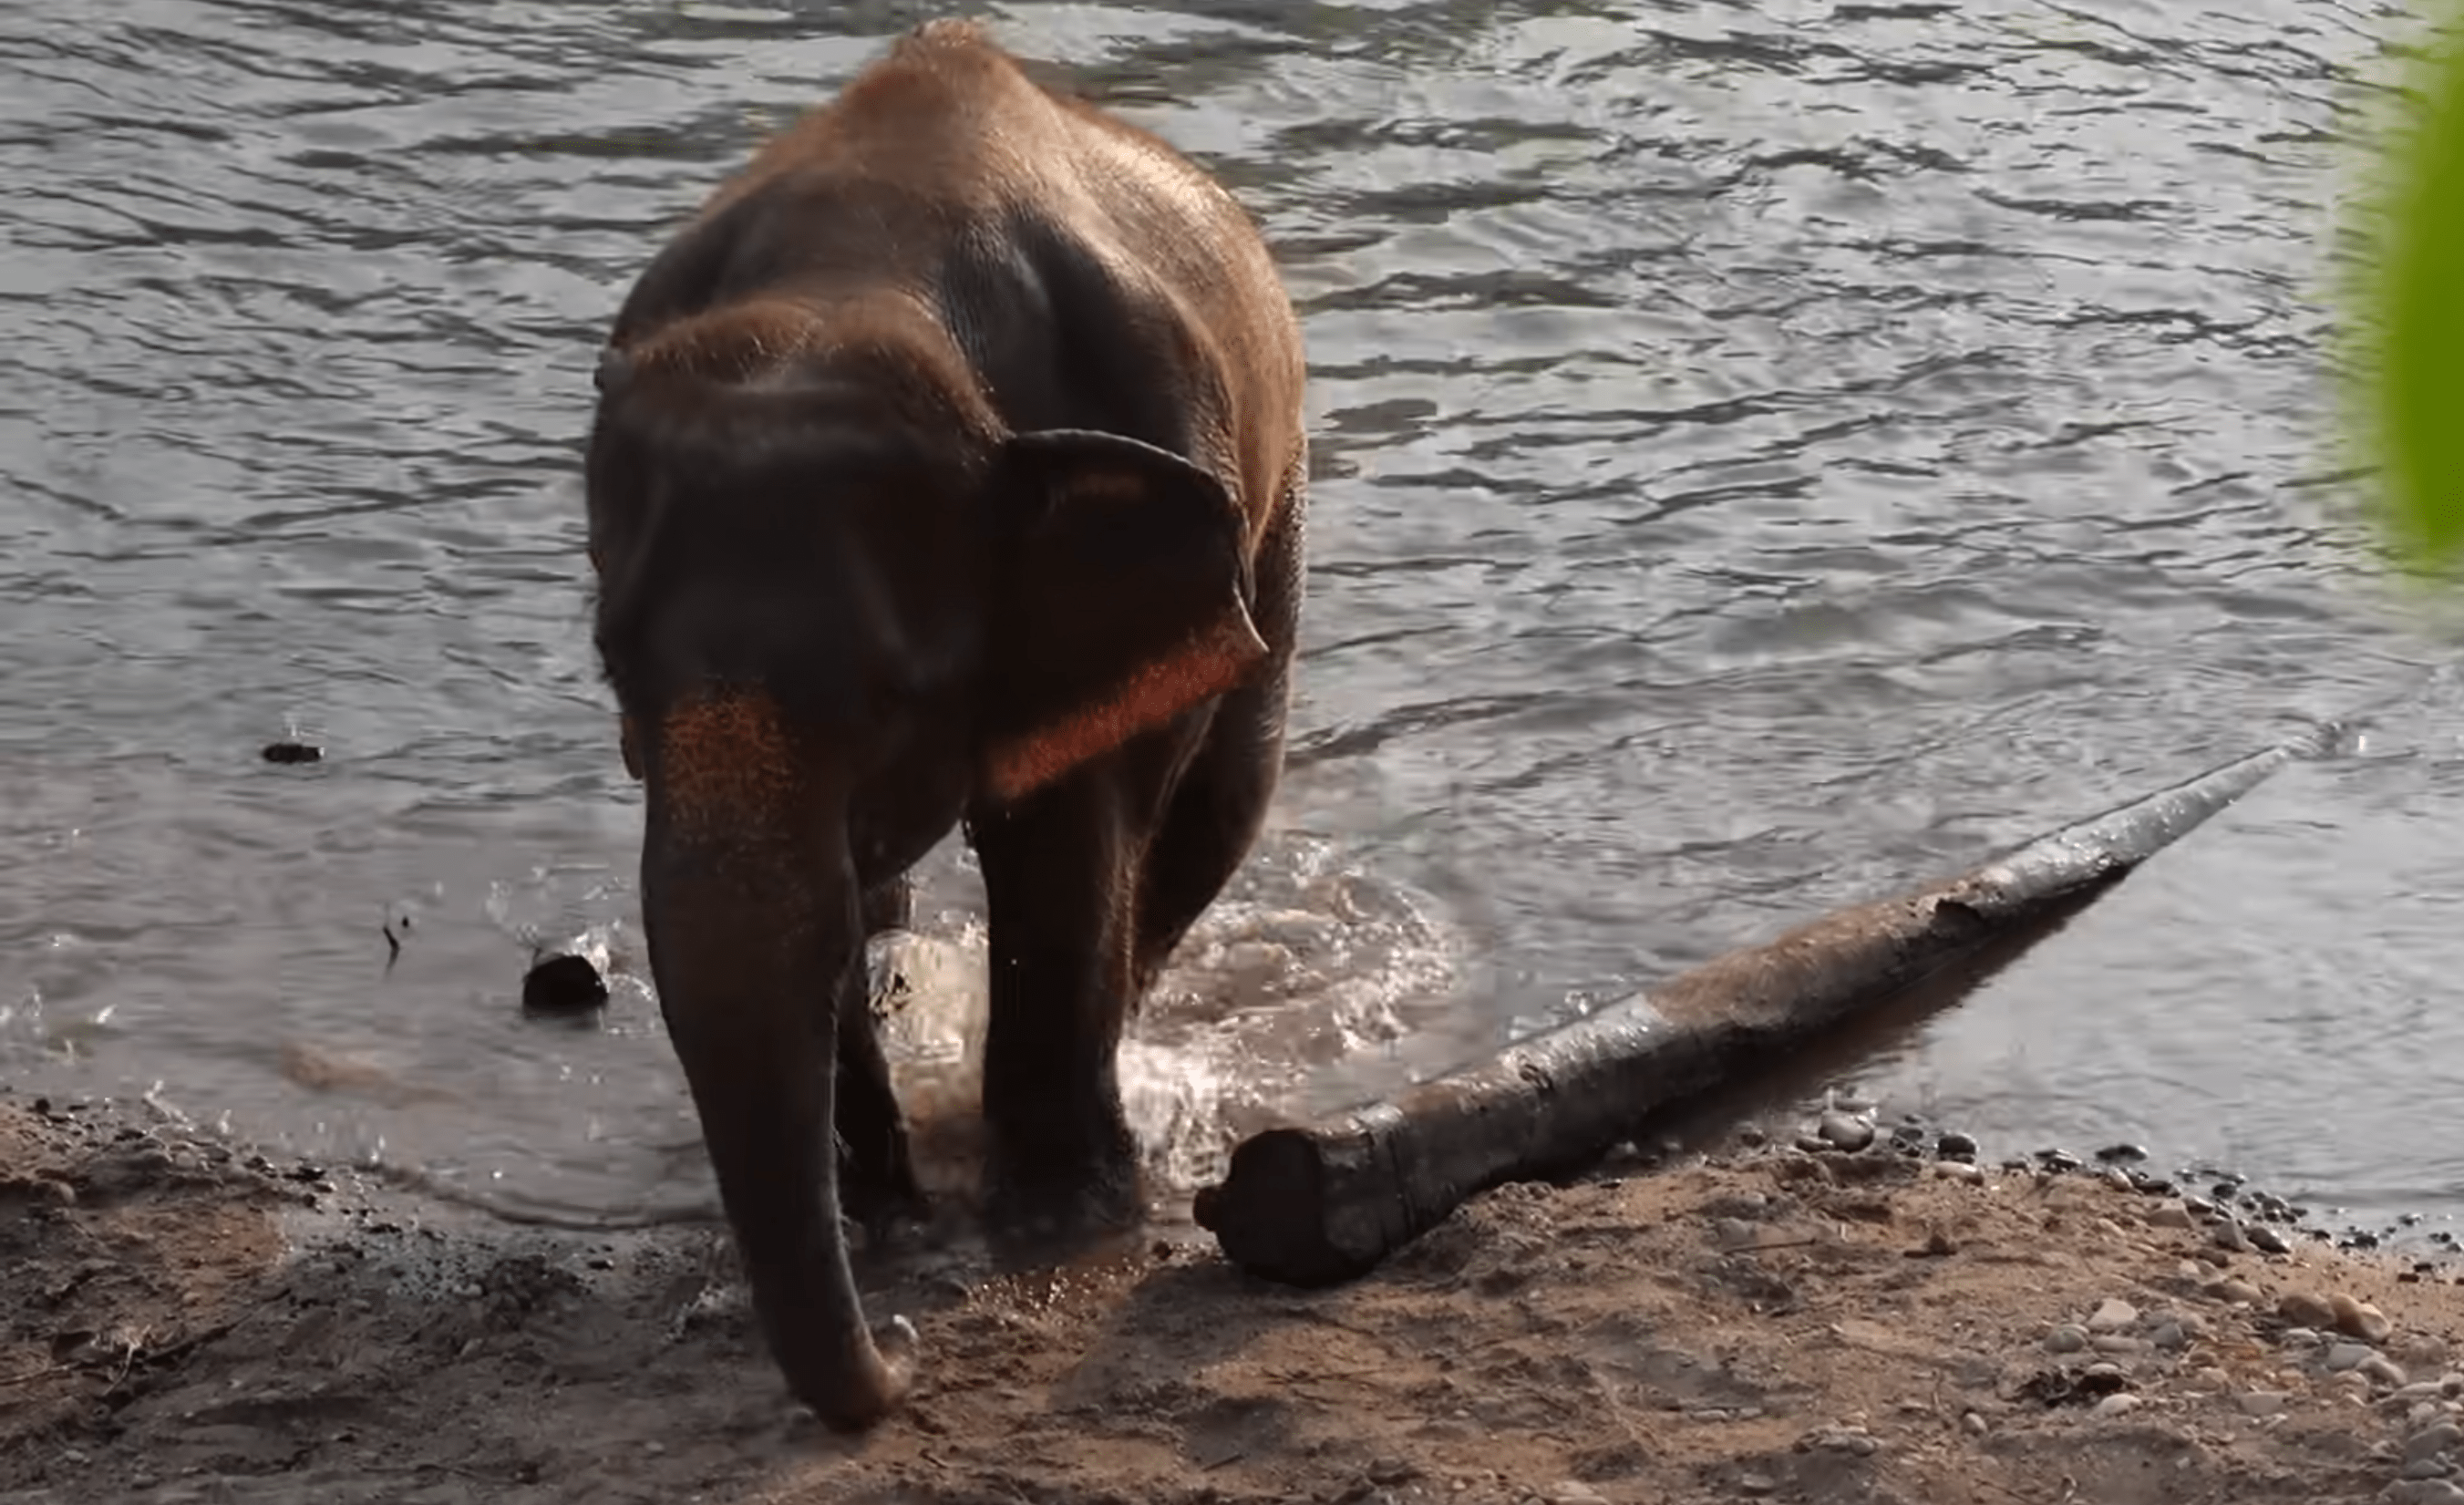 Elephants and rivers belong together